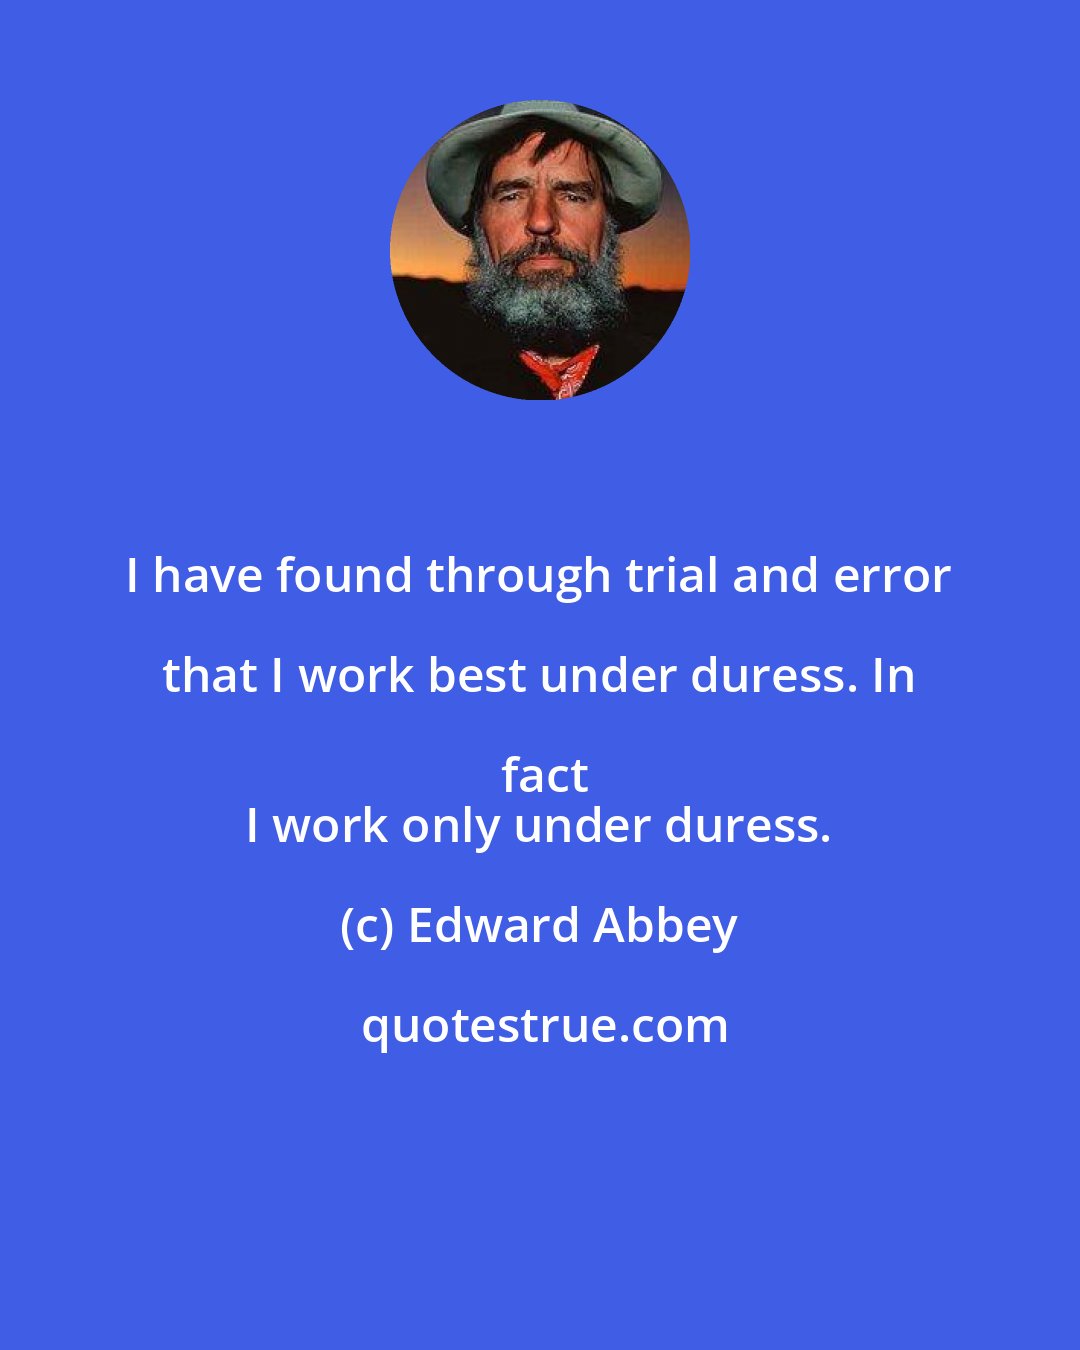 Edward Abbey: I have found through trial and error that I work best under duress. In fact
 I work only under duress.